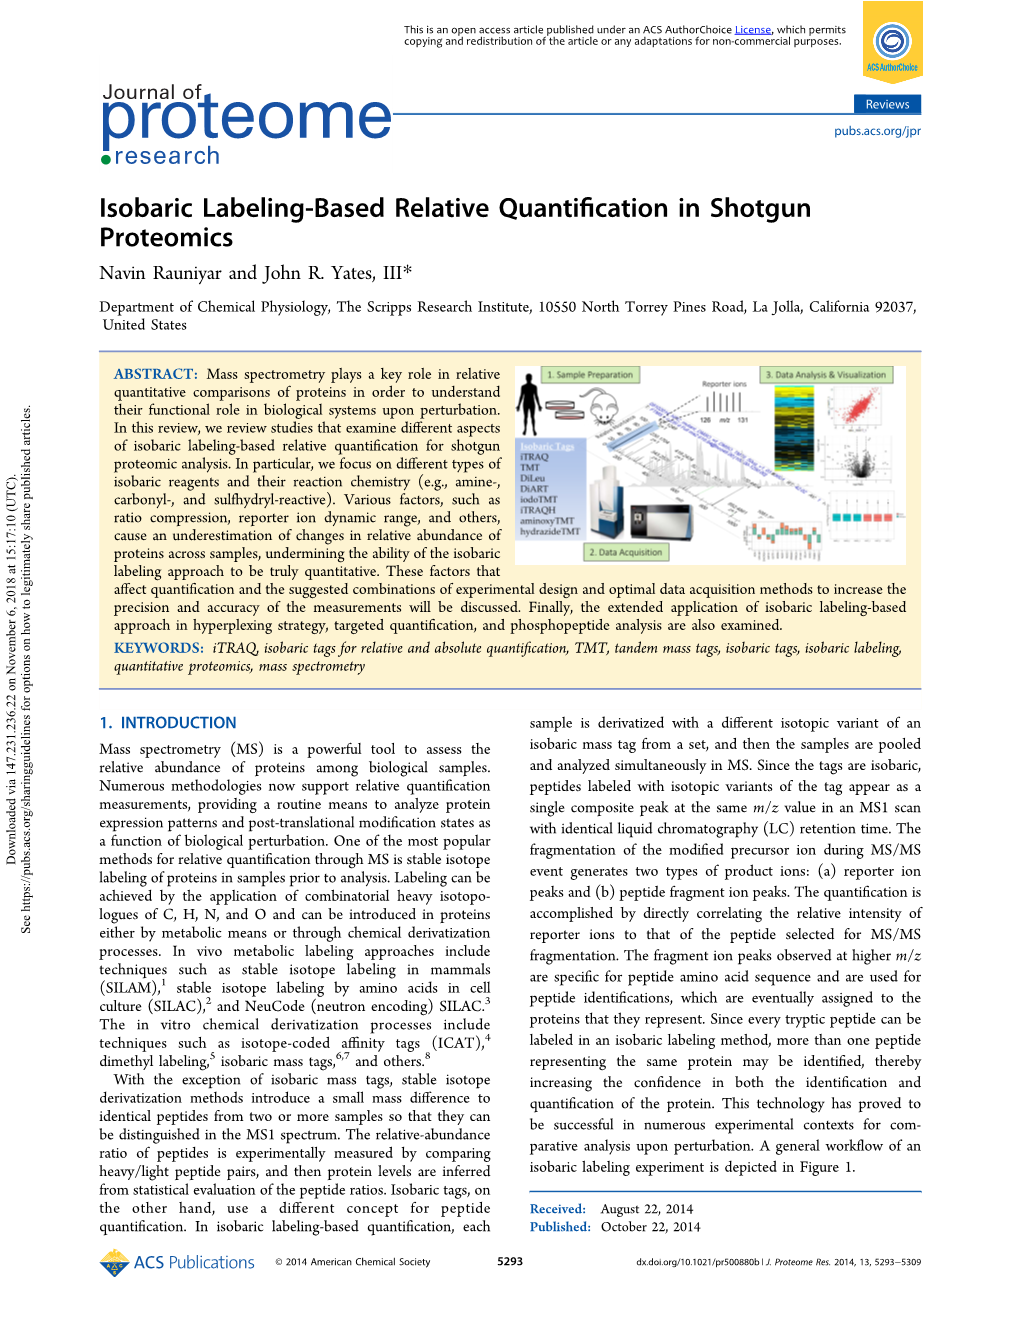 Isobaric Labeling-Based Relative Quantification in Shotgun Proteomics